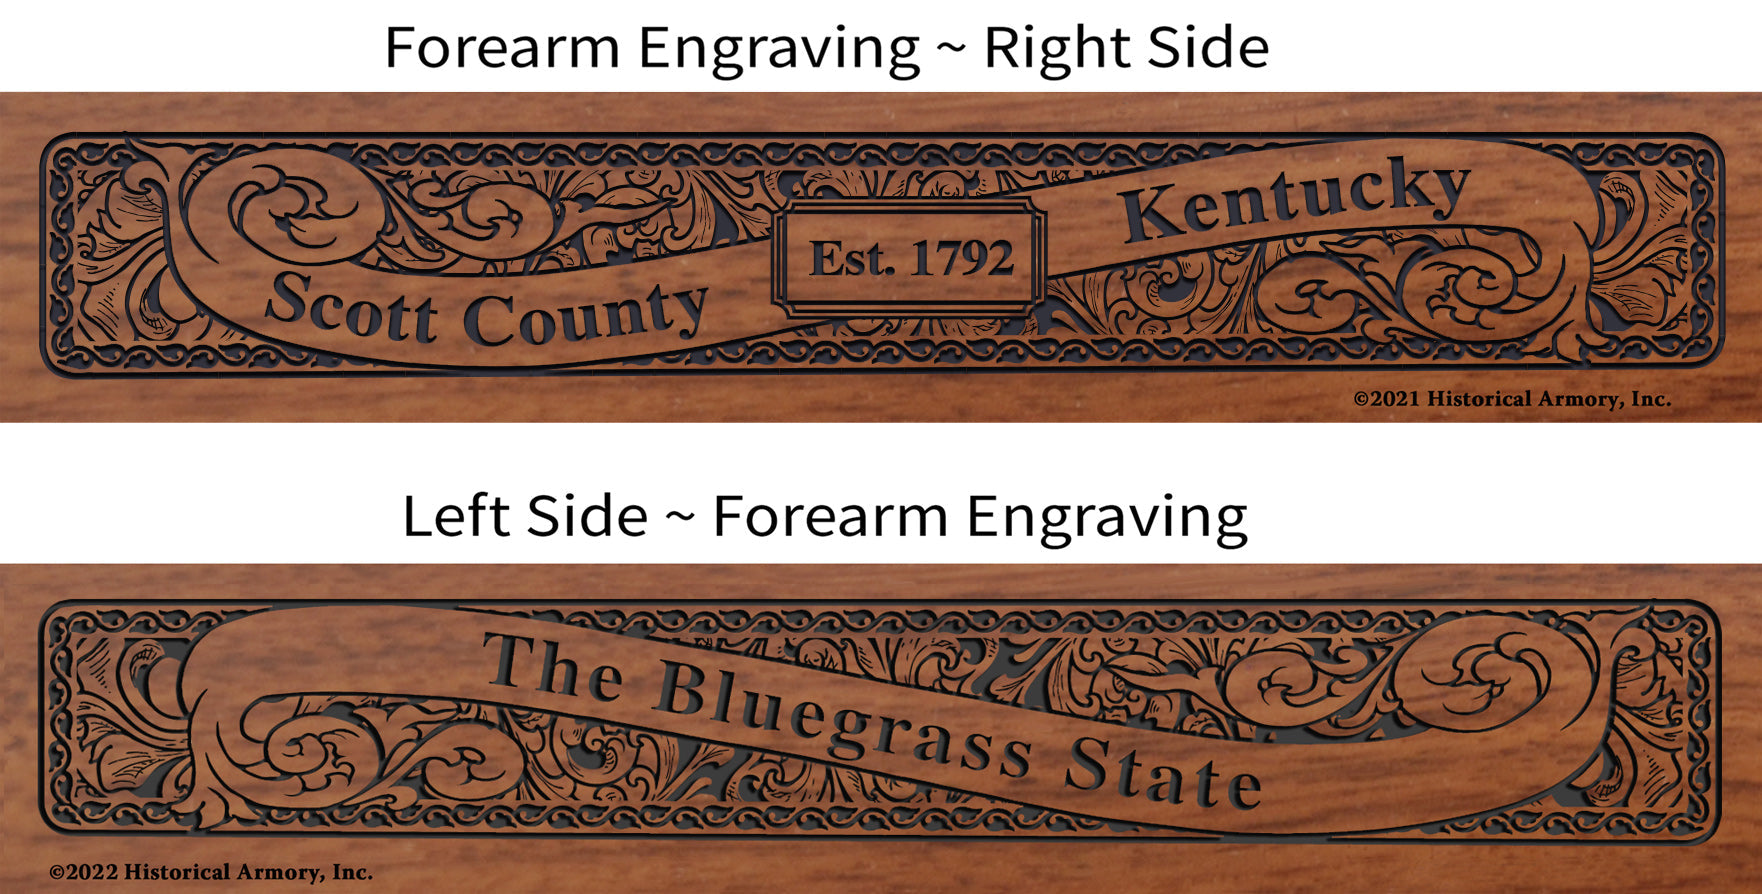 Scott County Kentucky Engraved Rifle Forearm